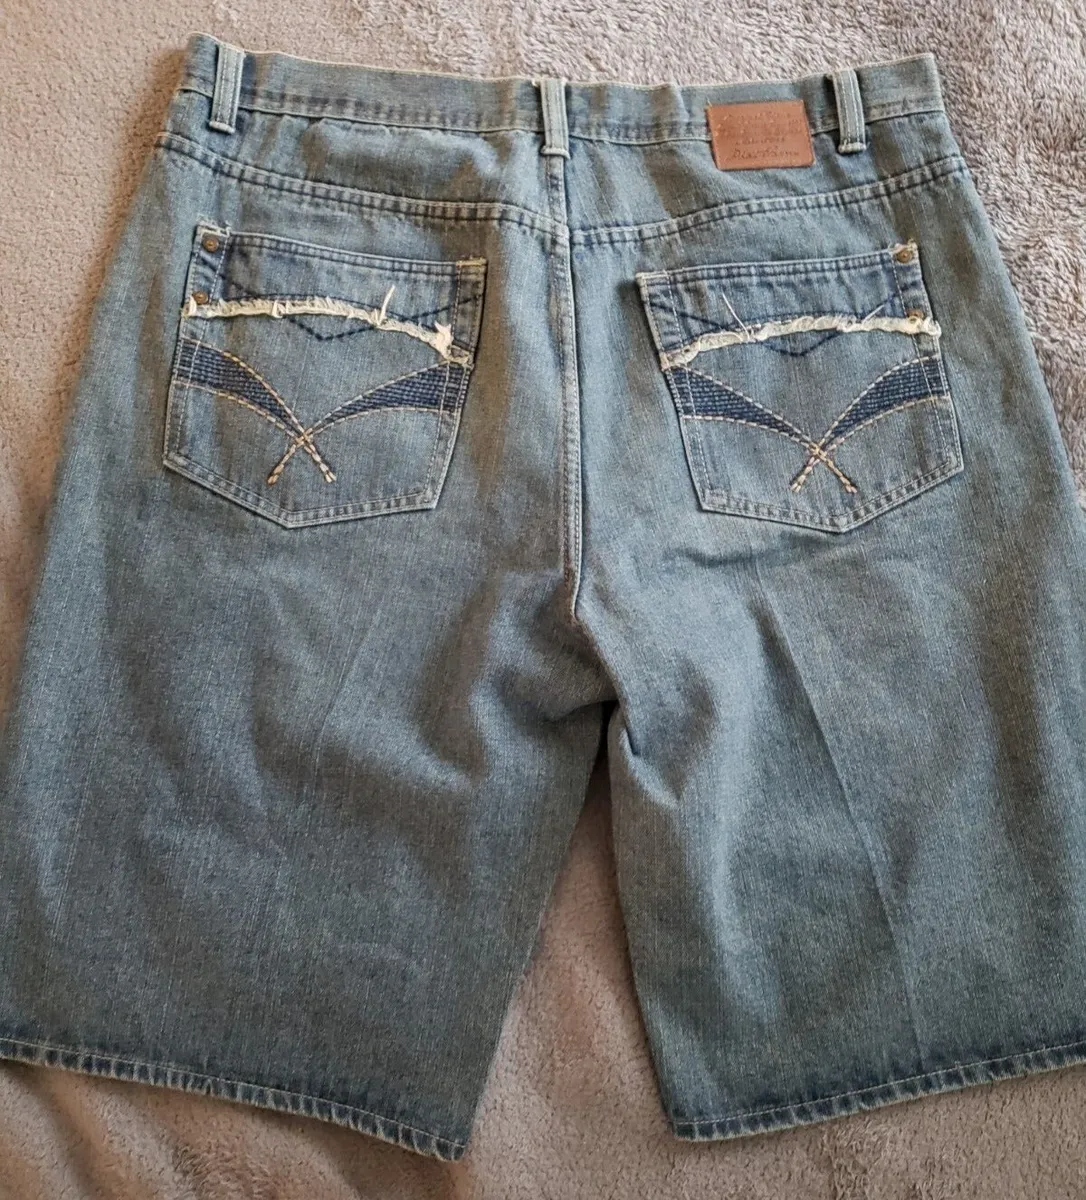 diego velazquez recommends phat farm jean shorts pic